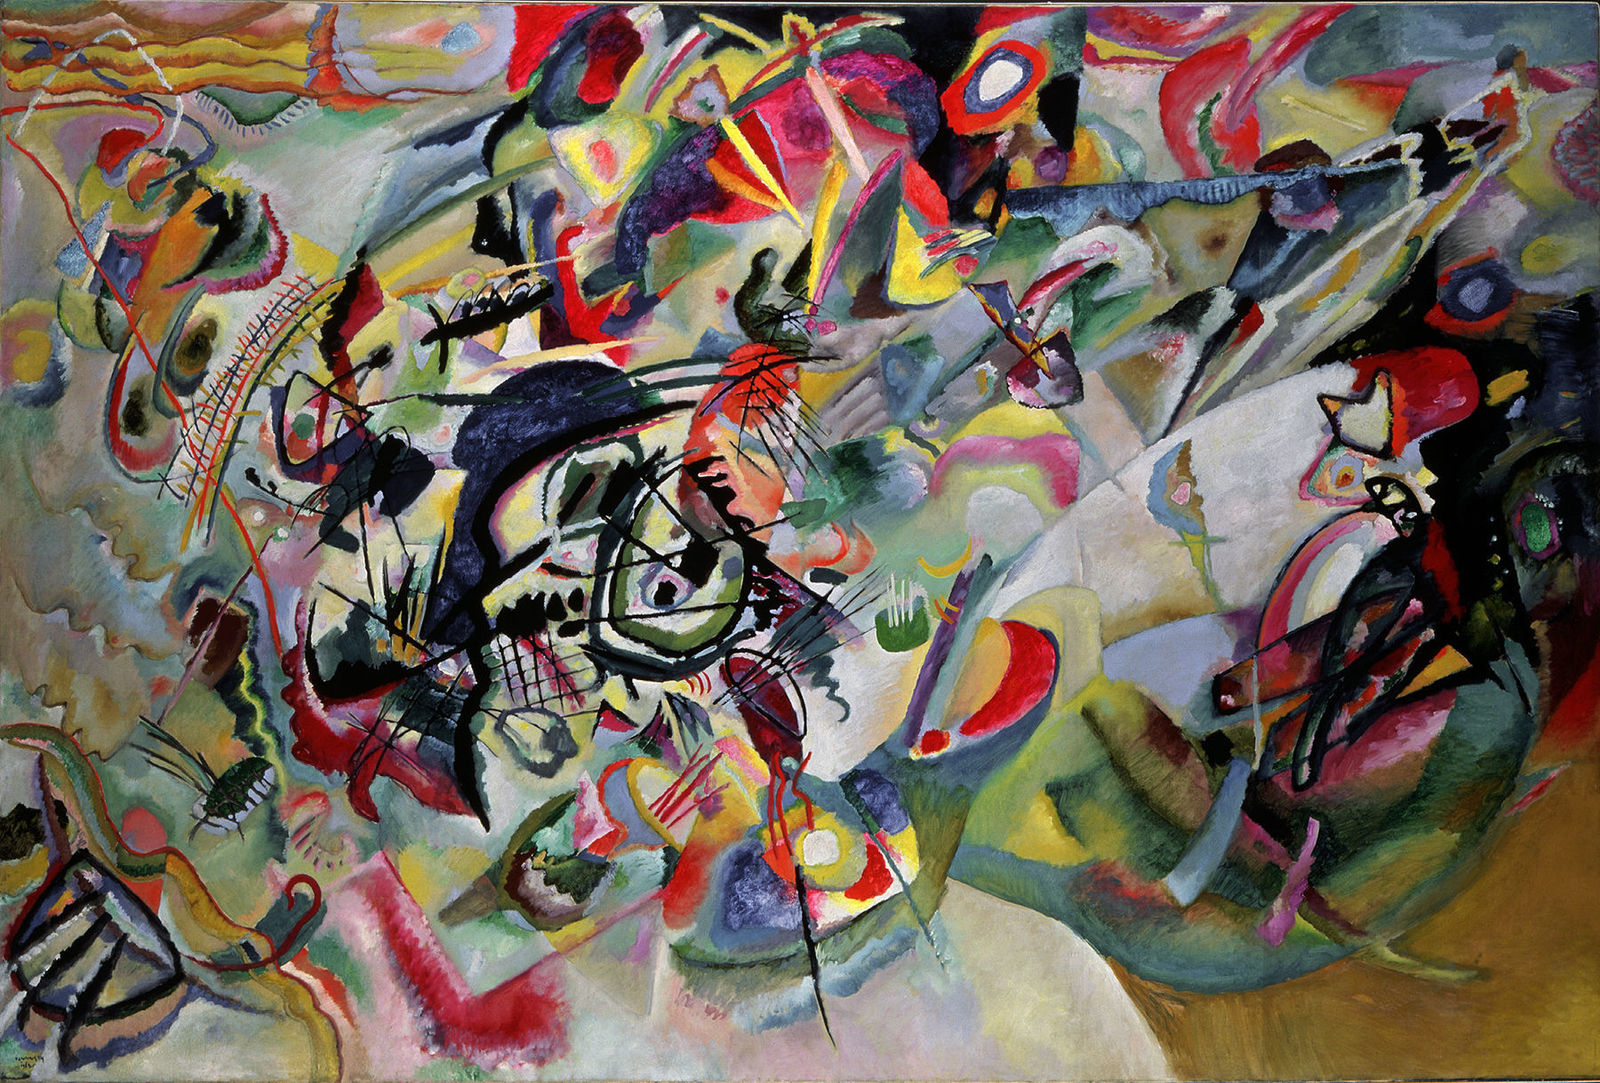 Vasiliy Kandinsky. Composition VII. 1913Oil on canvas. 200 x 300. The State Tretyakov Gallery